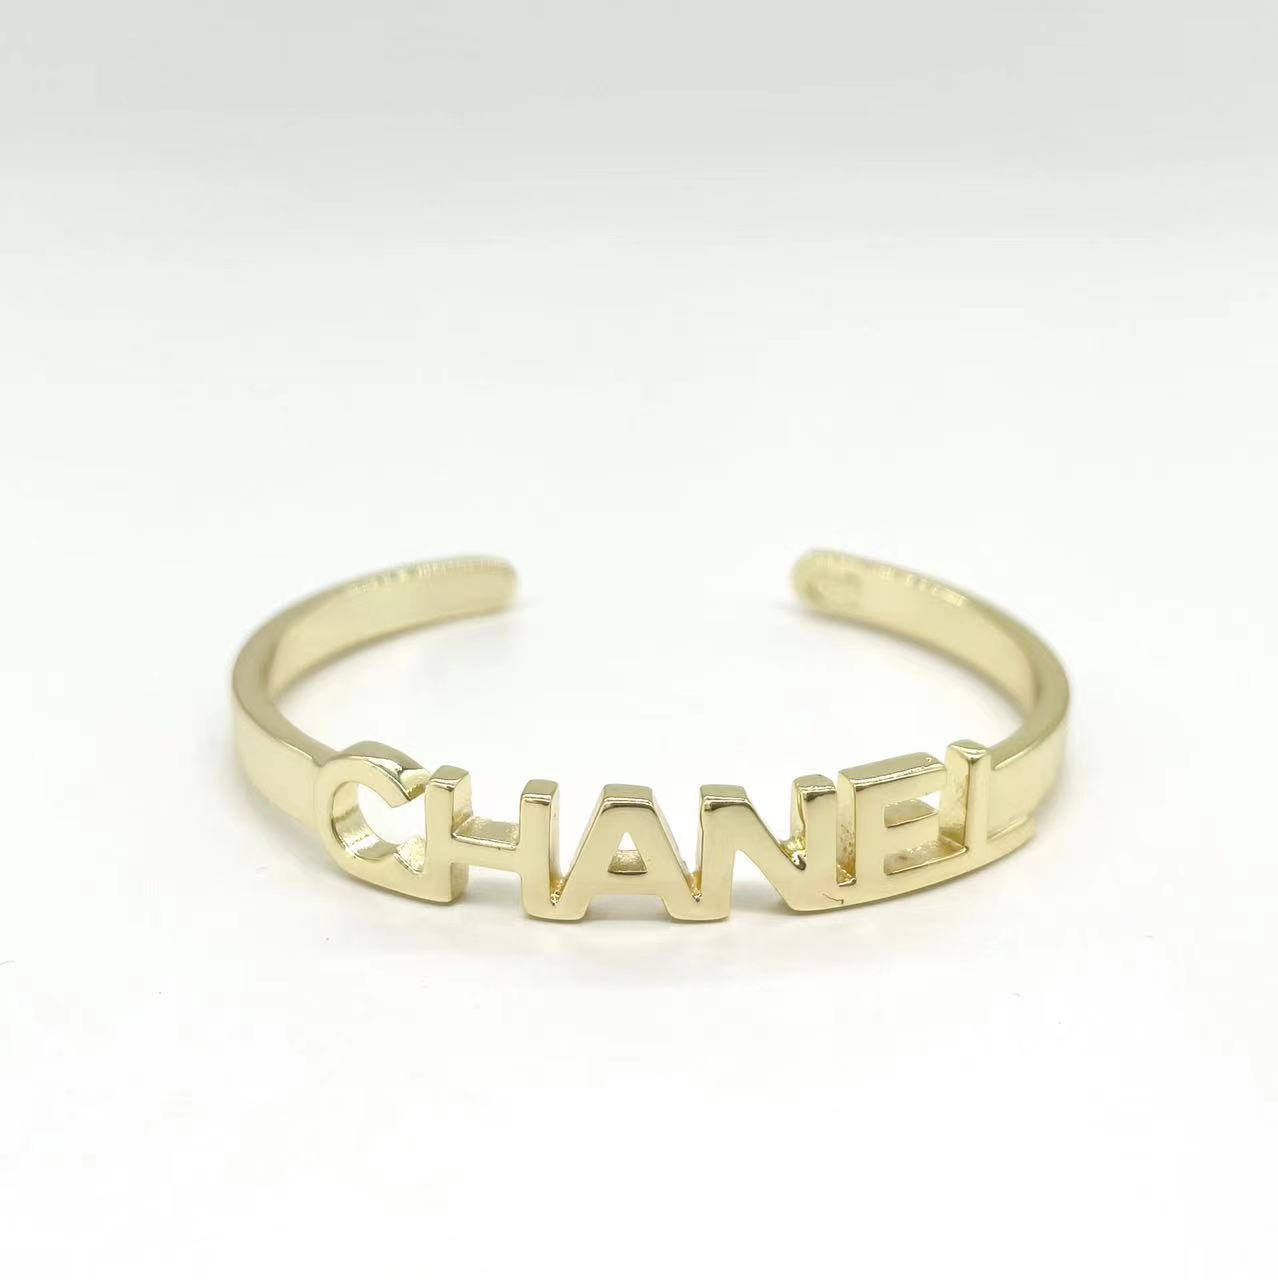 Chanel Letter Bracelet